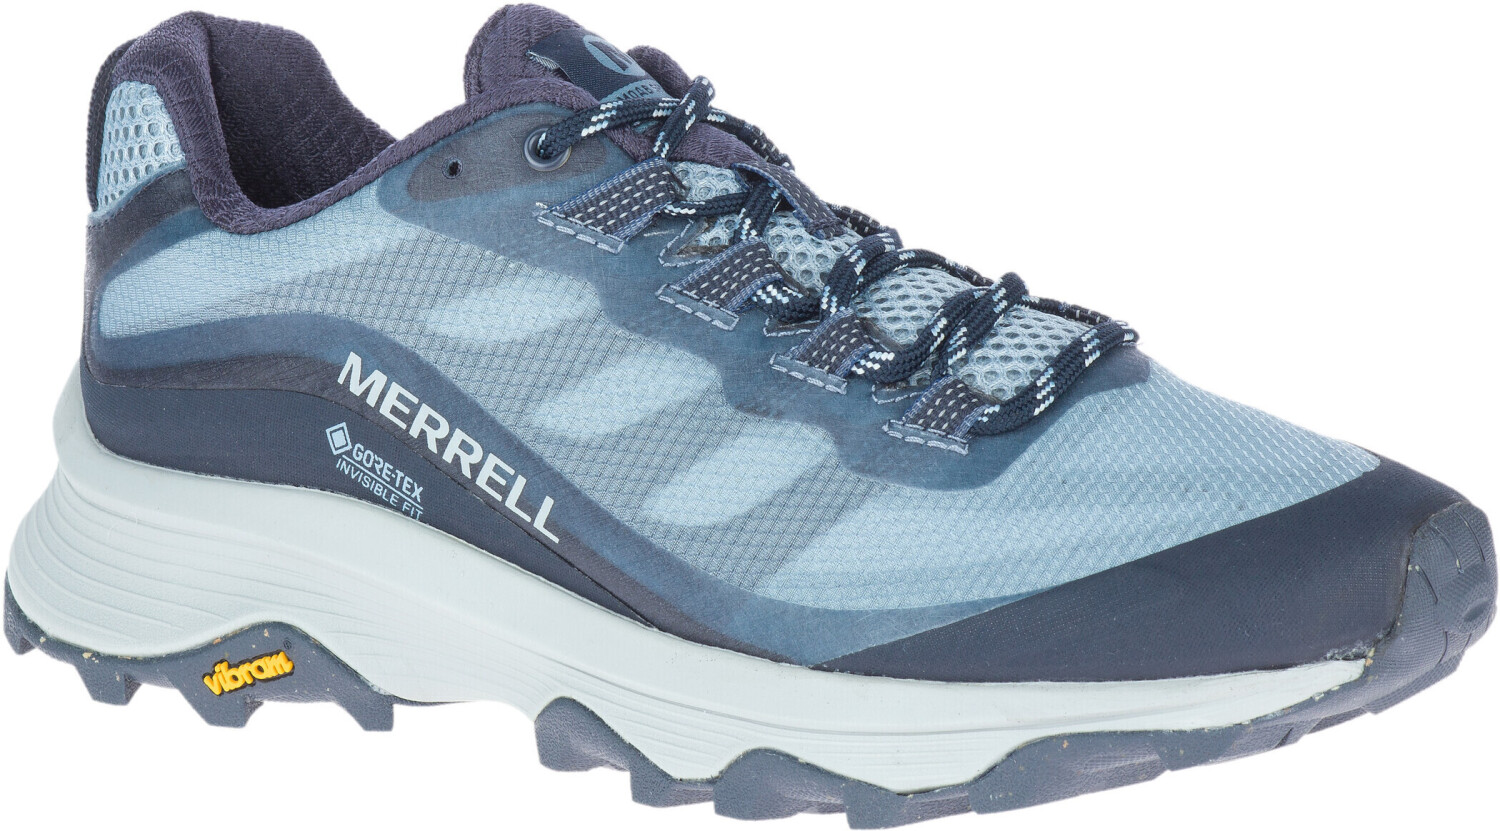 Merrell Moab 3 GTX - Zapatillas multideporte Mujer, Envío gratuito